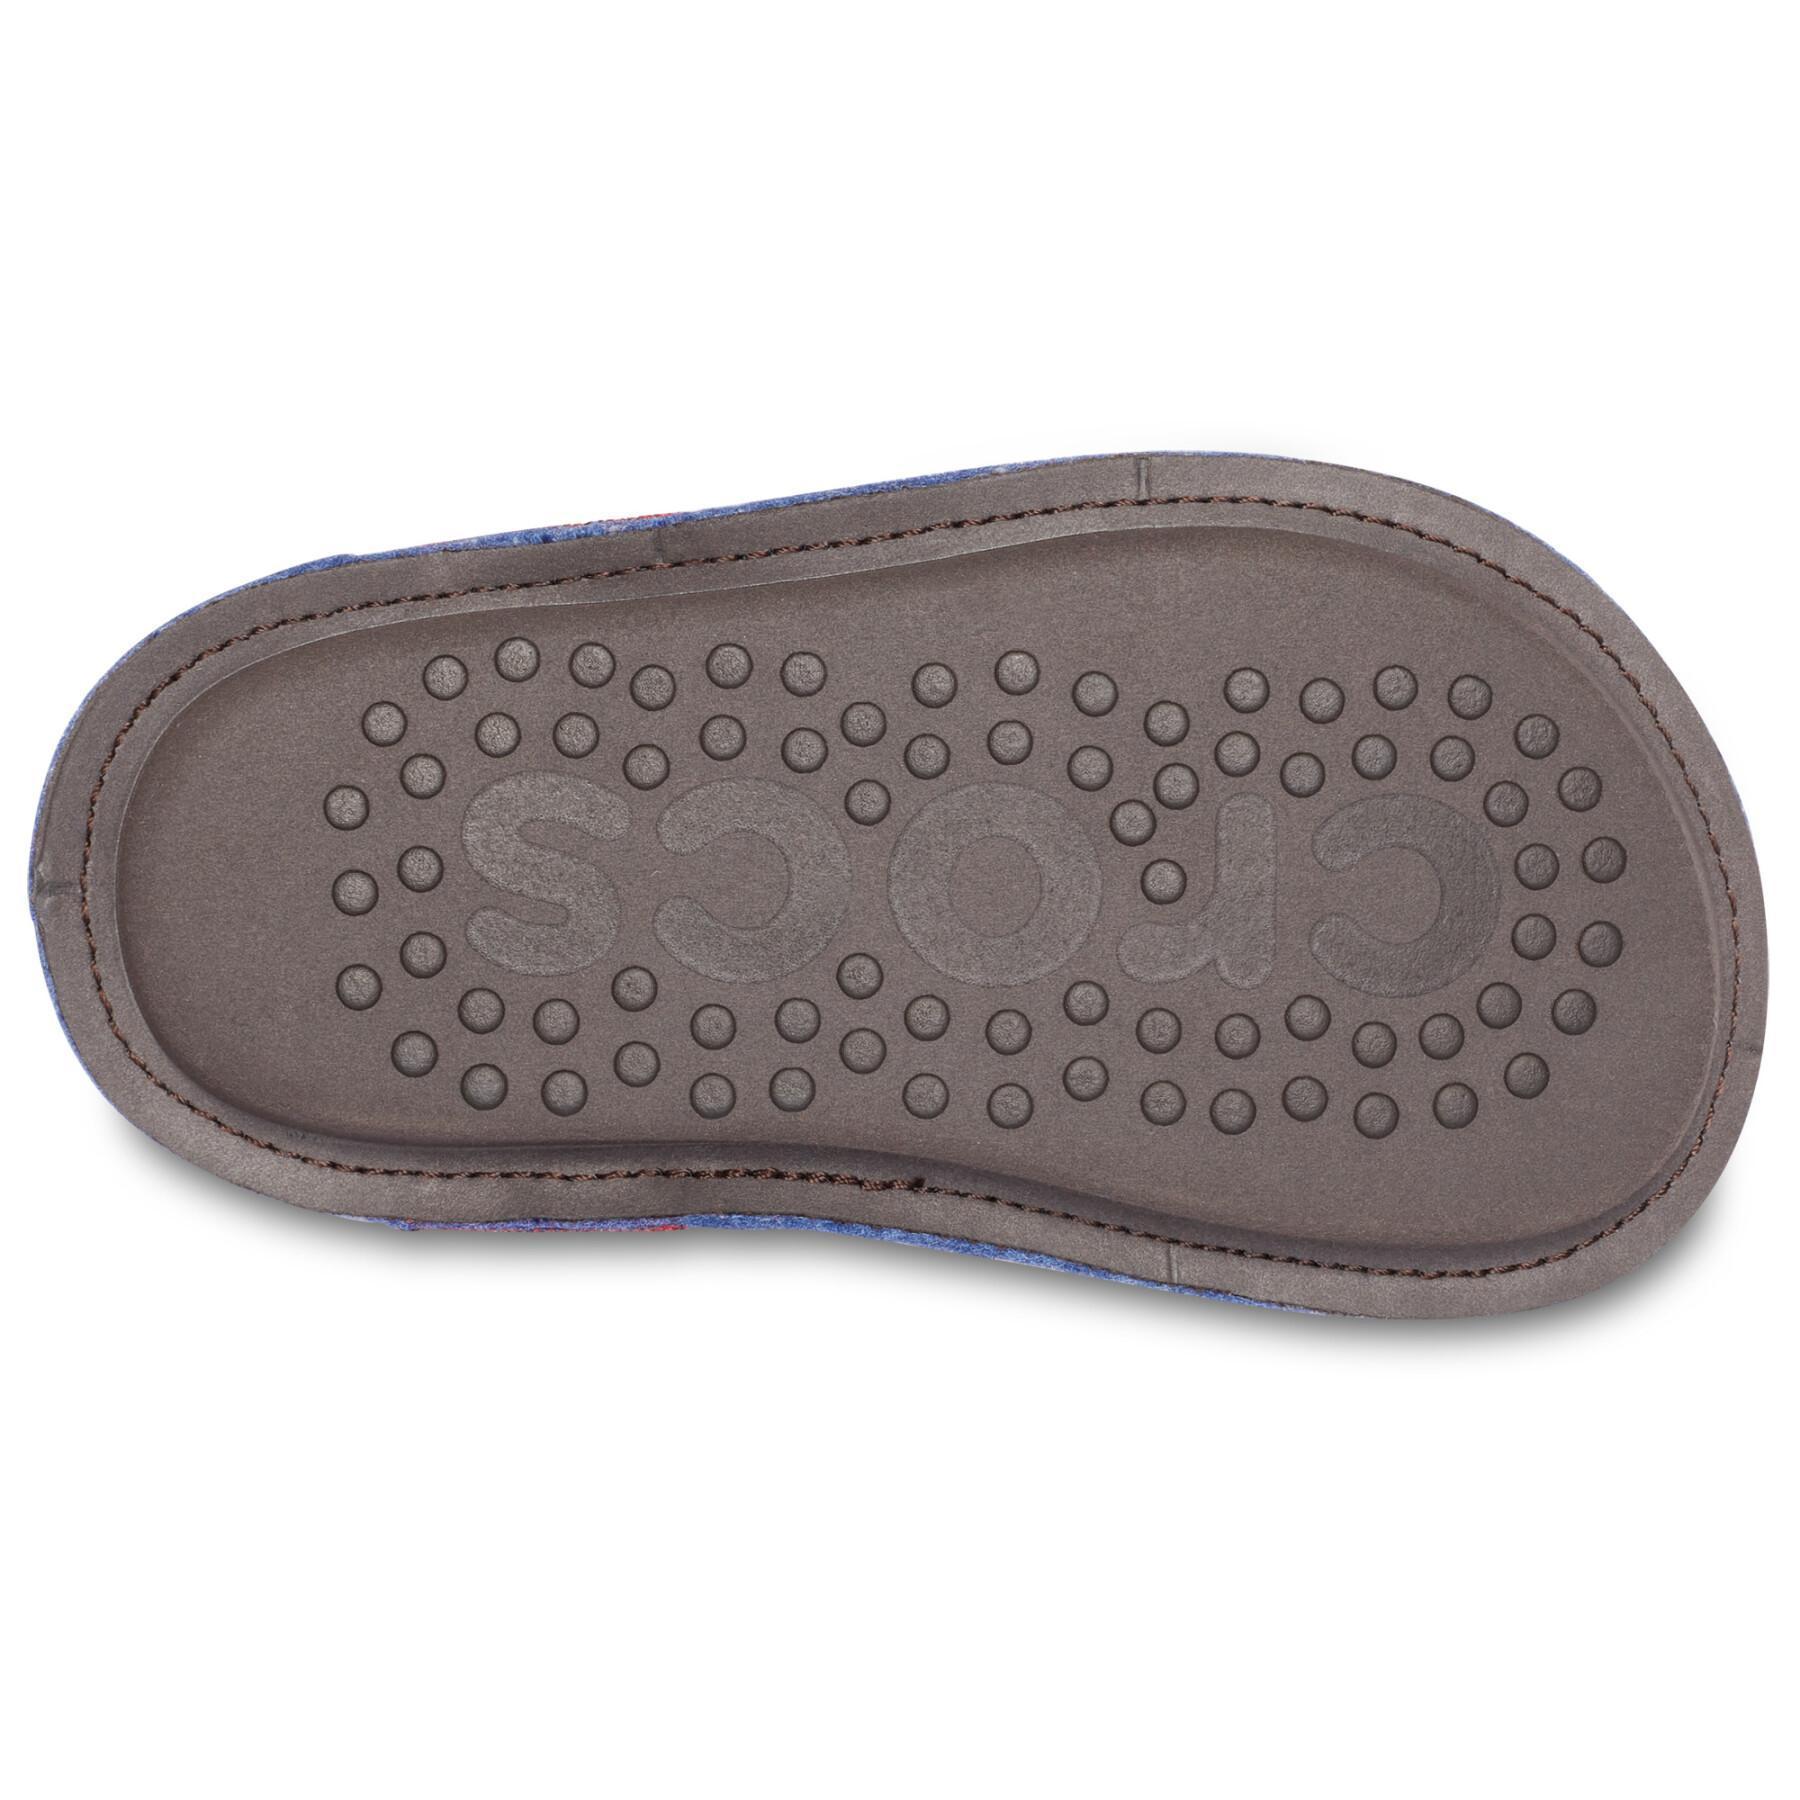 Kindersloffen Crocs classic slipper